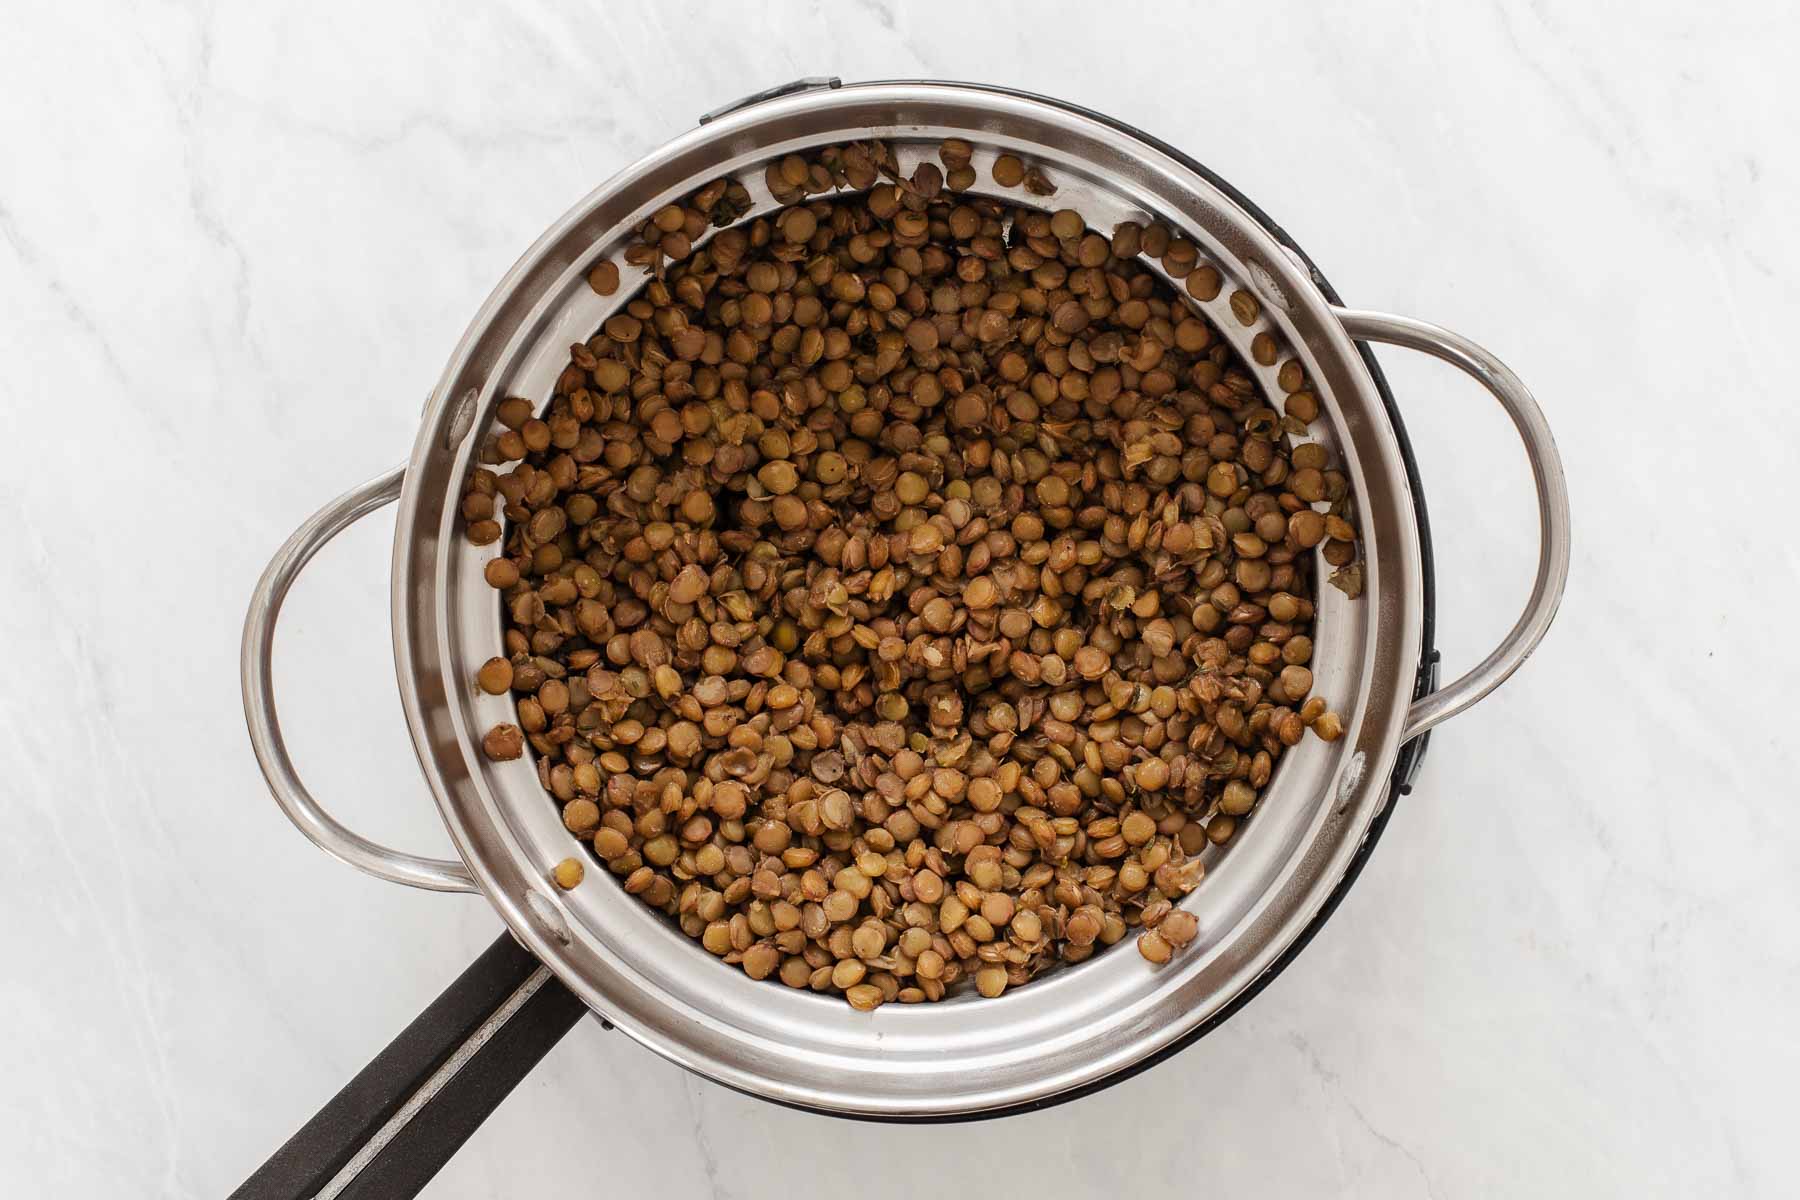 Freshly cooked lentils in a saucepan.